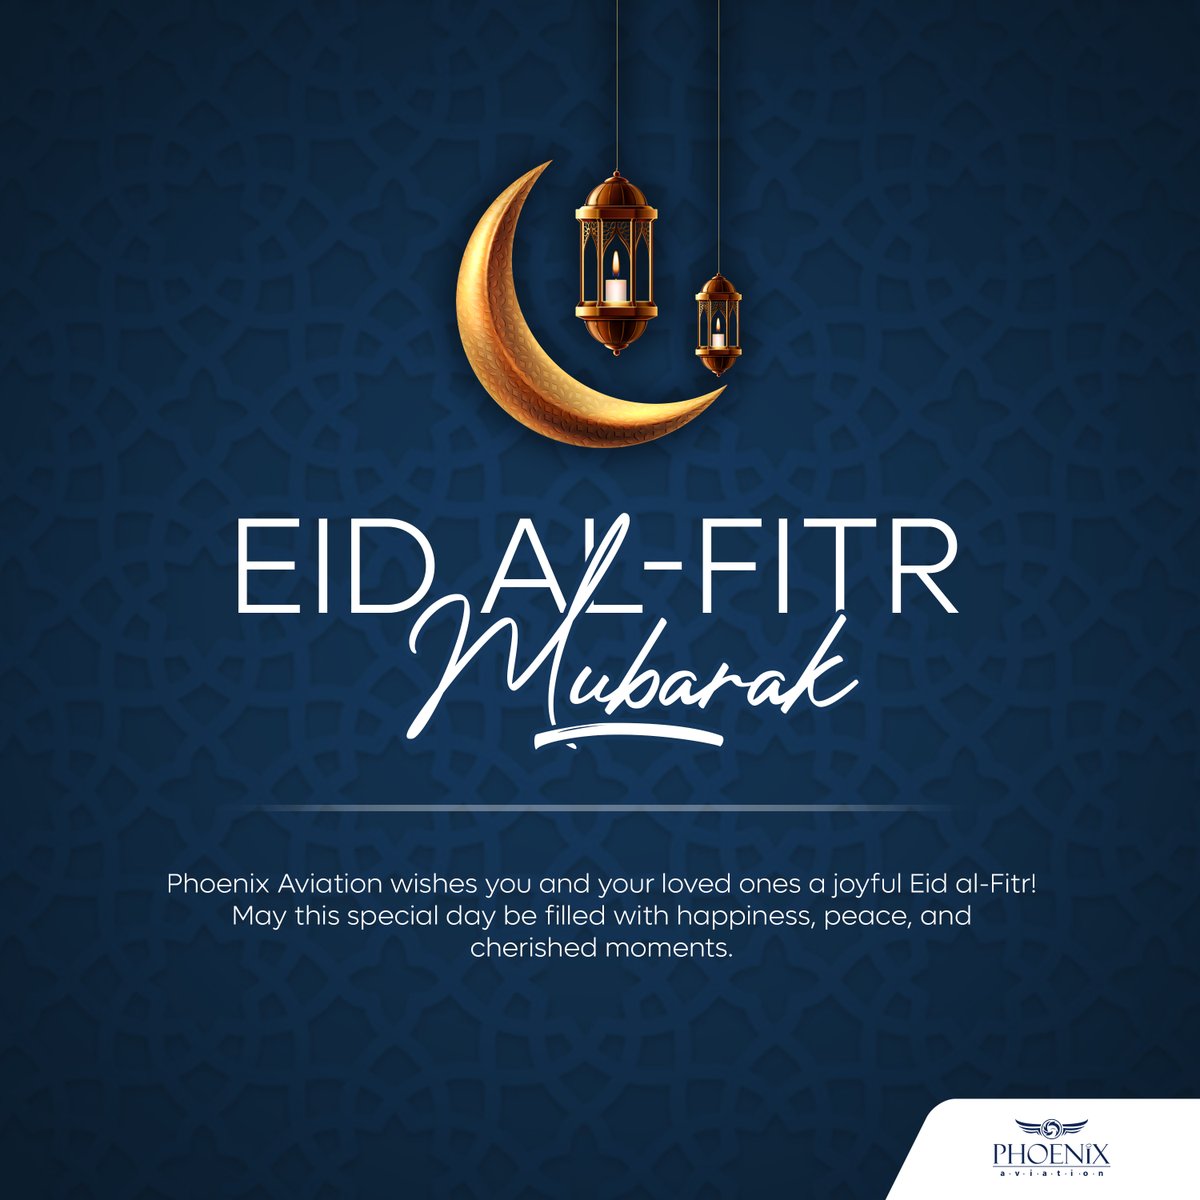 Eid Mubarak to all our esteemed Muslim colleagues, partners, friends and followers.

#eid #eidmubarak #happyeid #iflyphoenix #phoenixaviation #privateflights #flyprivate #privatejets #celebrating30years